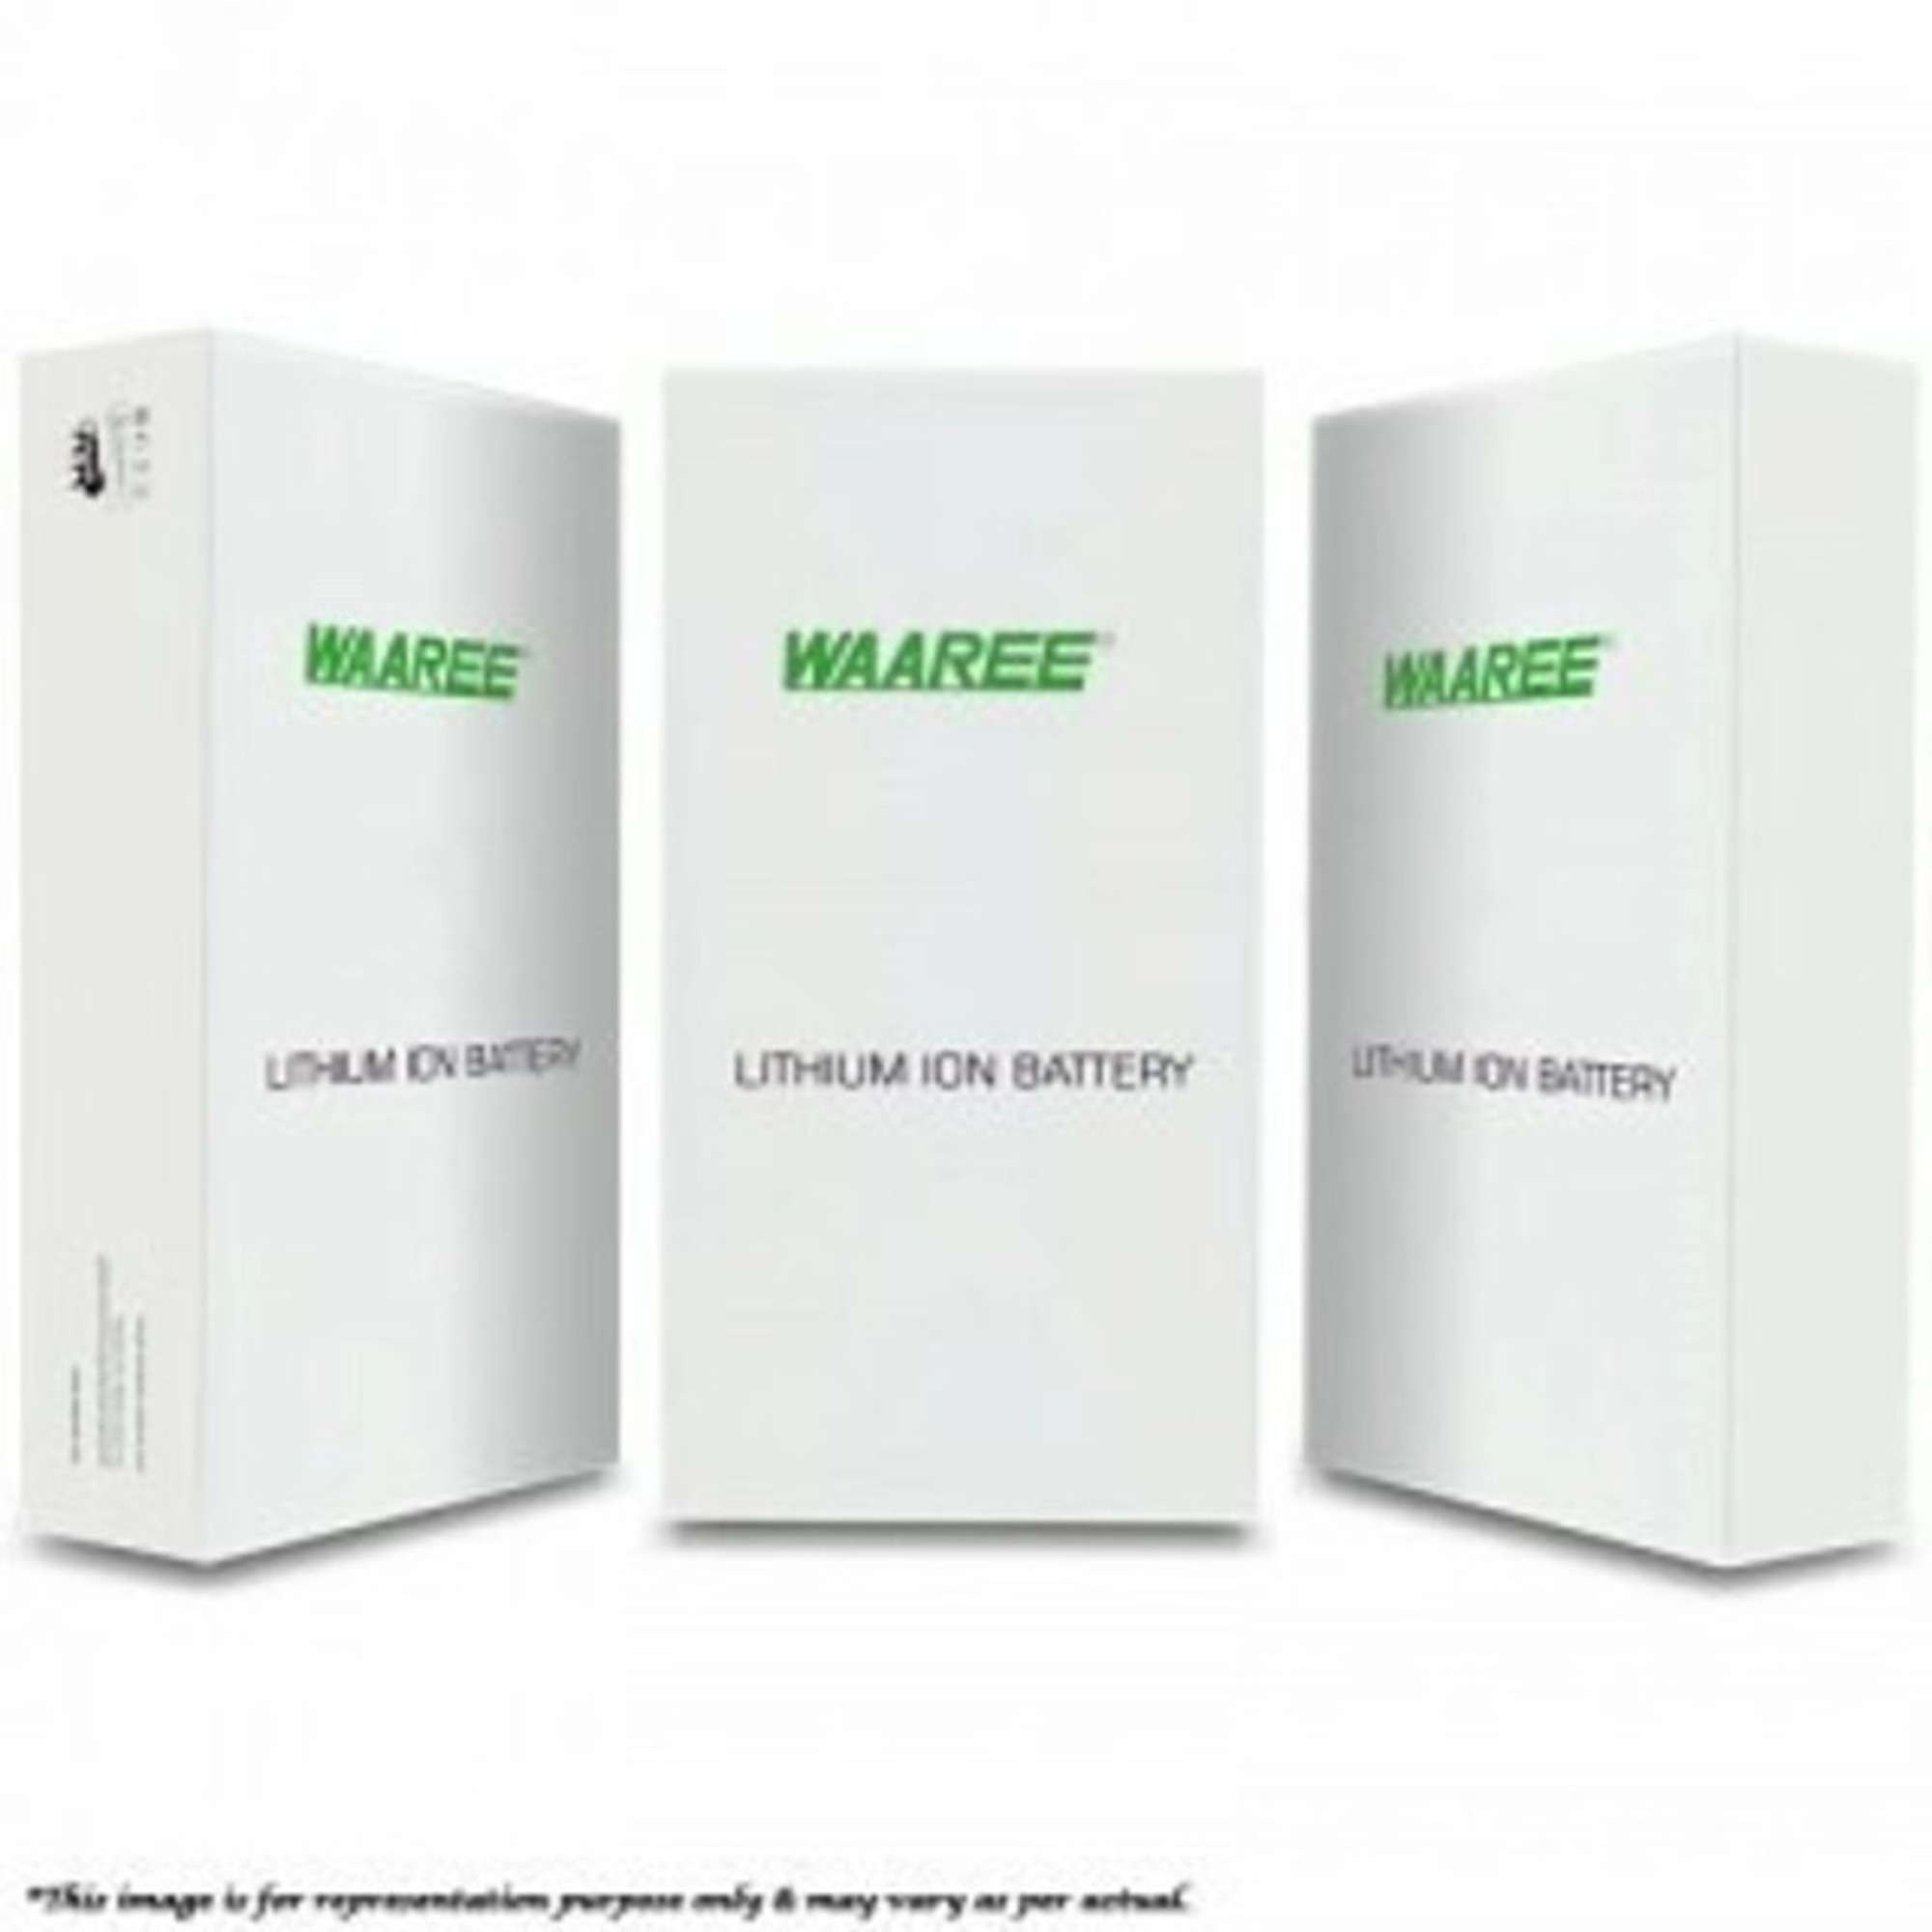 Waaree 48V/160 Ah (7680 Wh) Li-Ion LFP Battery Packs